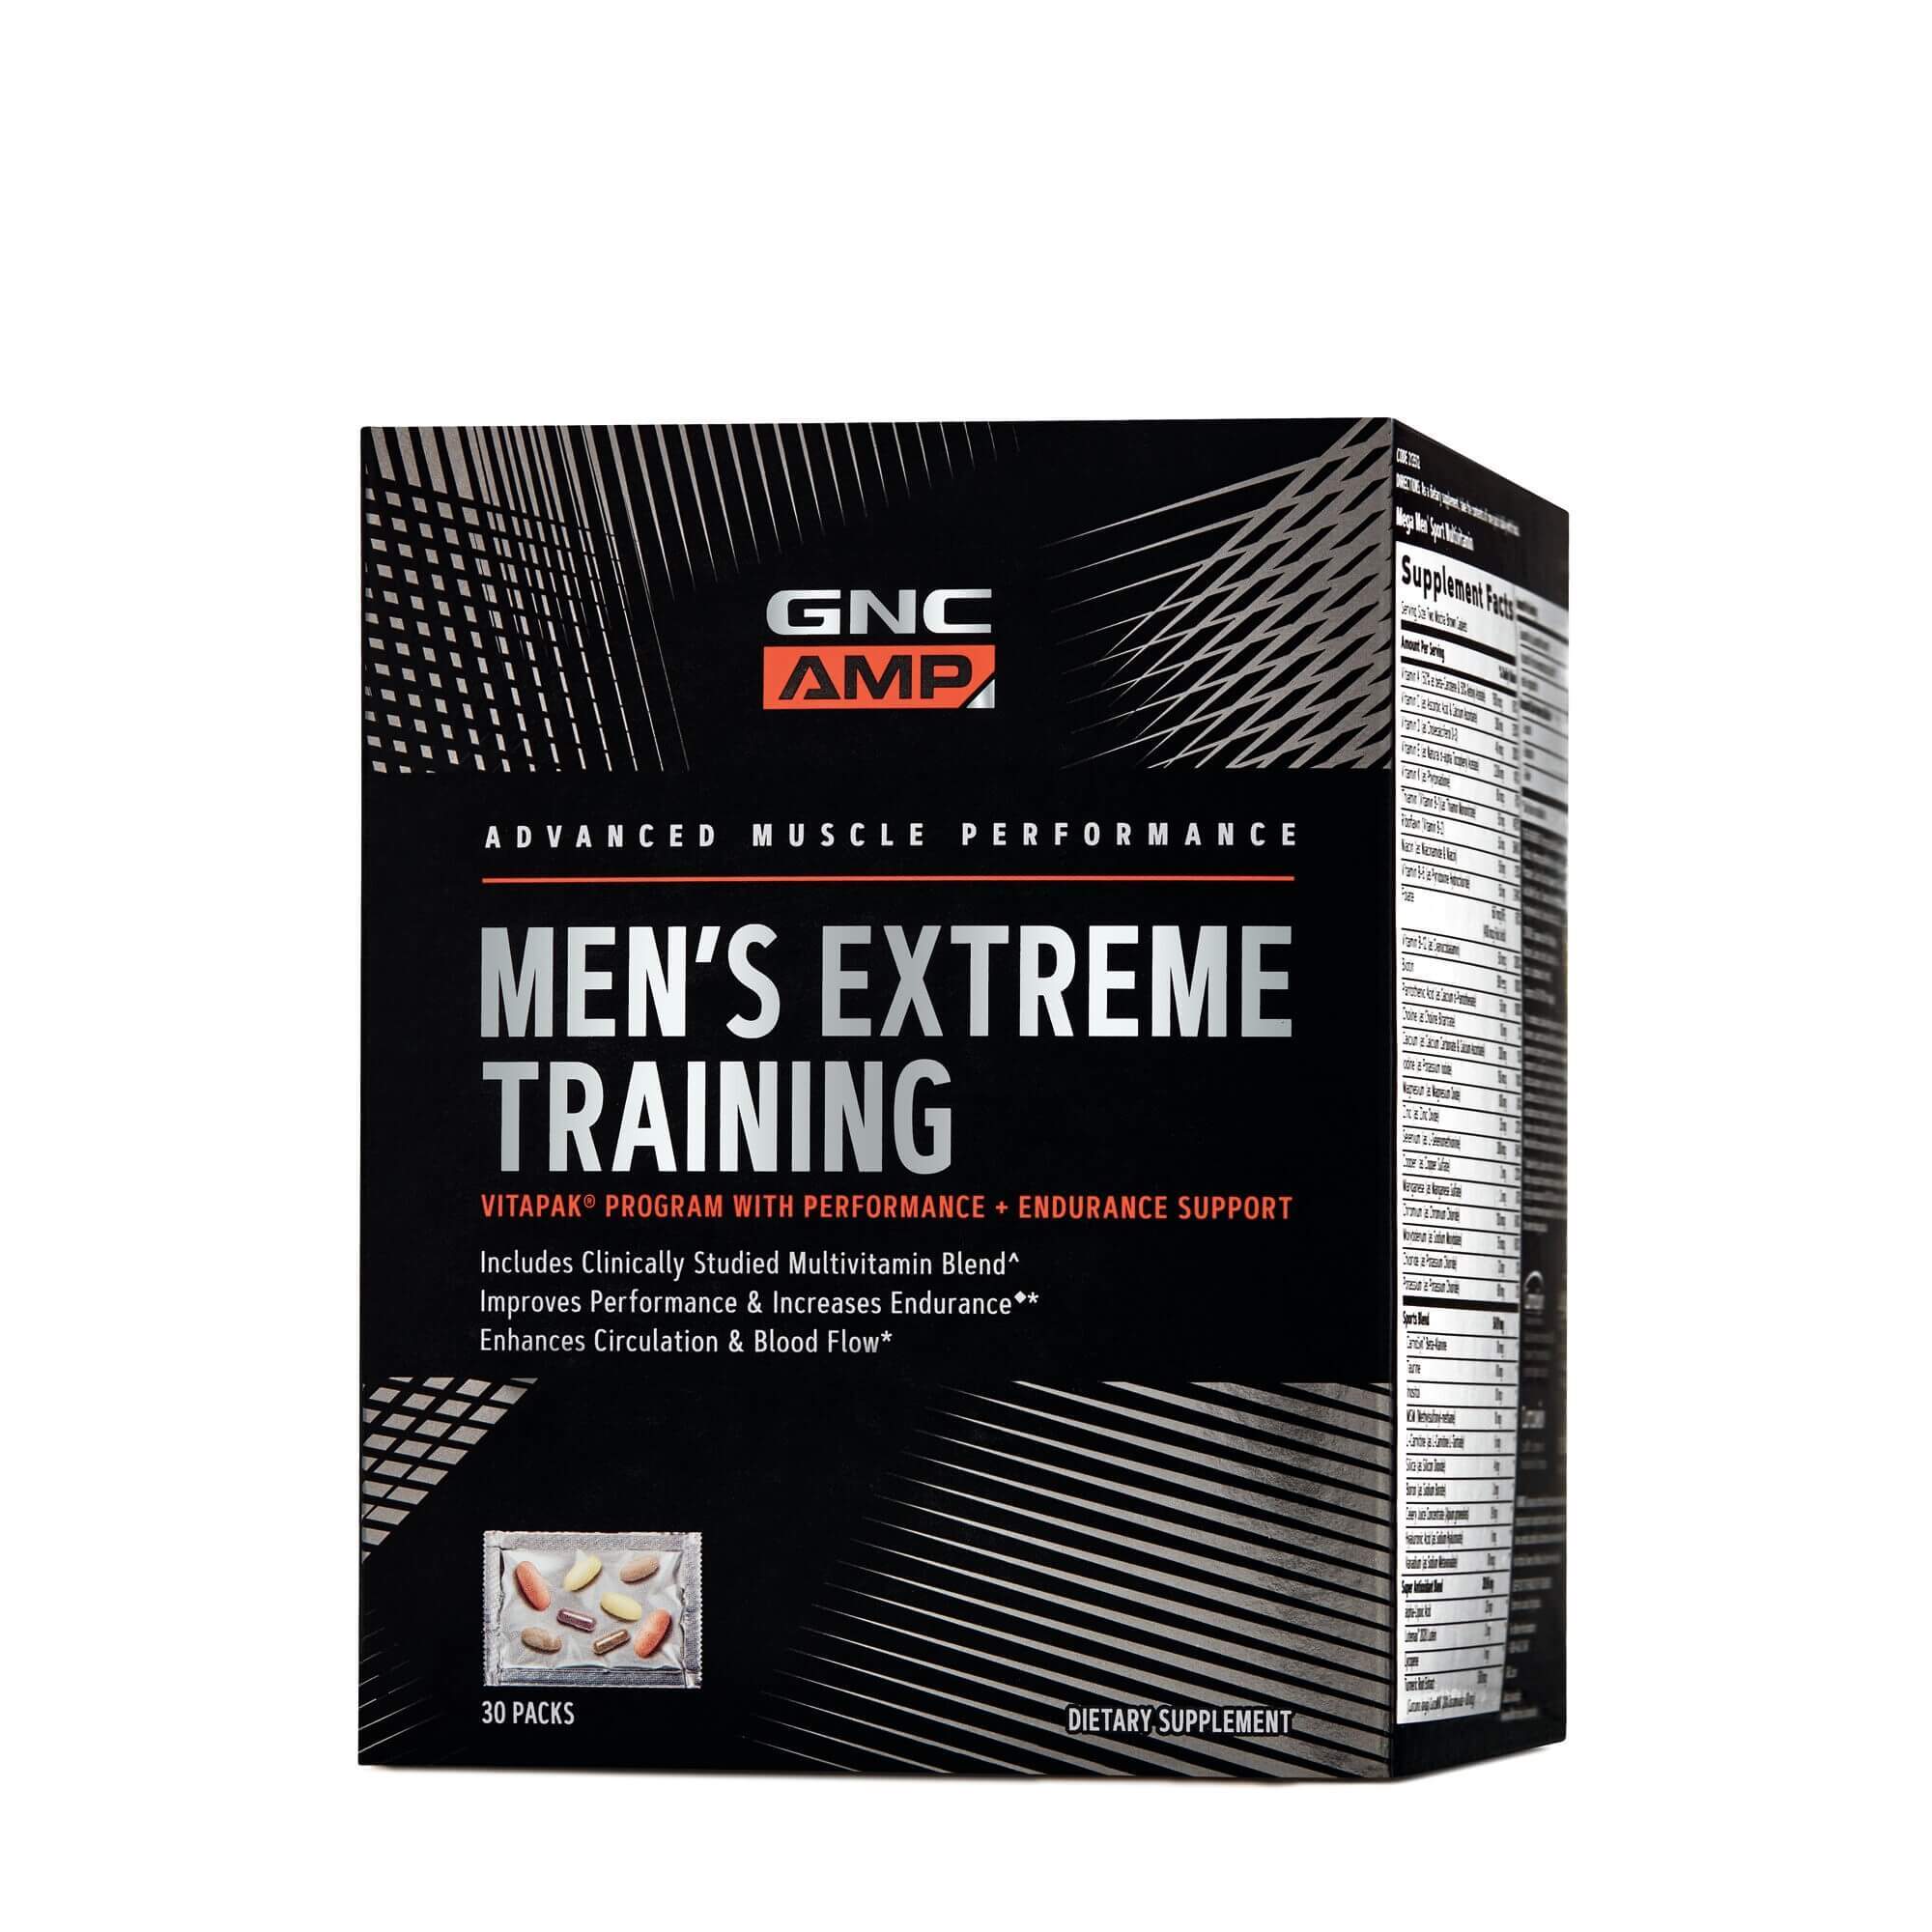 Gnc Amp Men\'s Extreme Training, Program Vitapak Pentru Performanta Si Anduranta, 30 Pachete